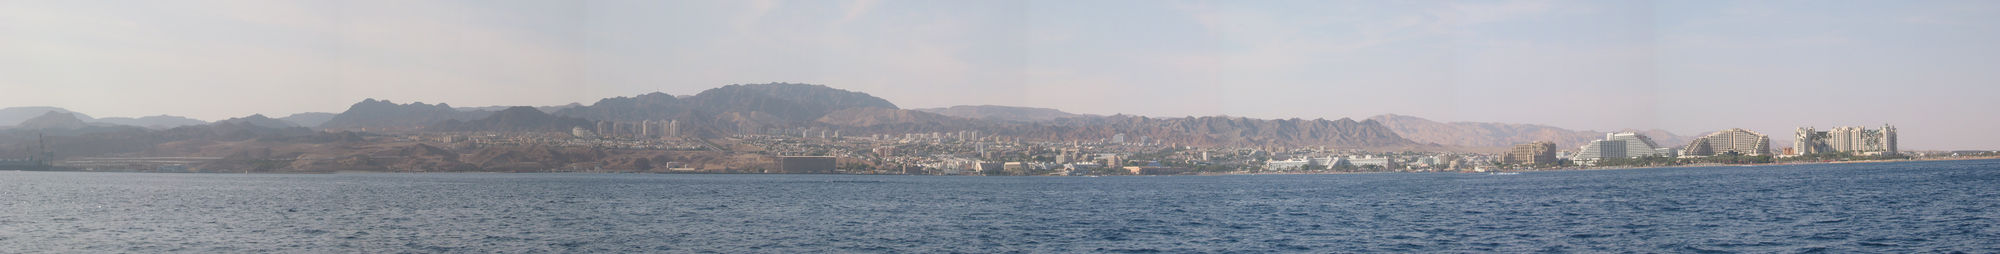 Panorama města Ejlat